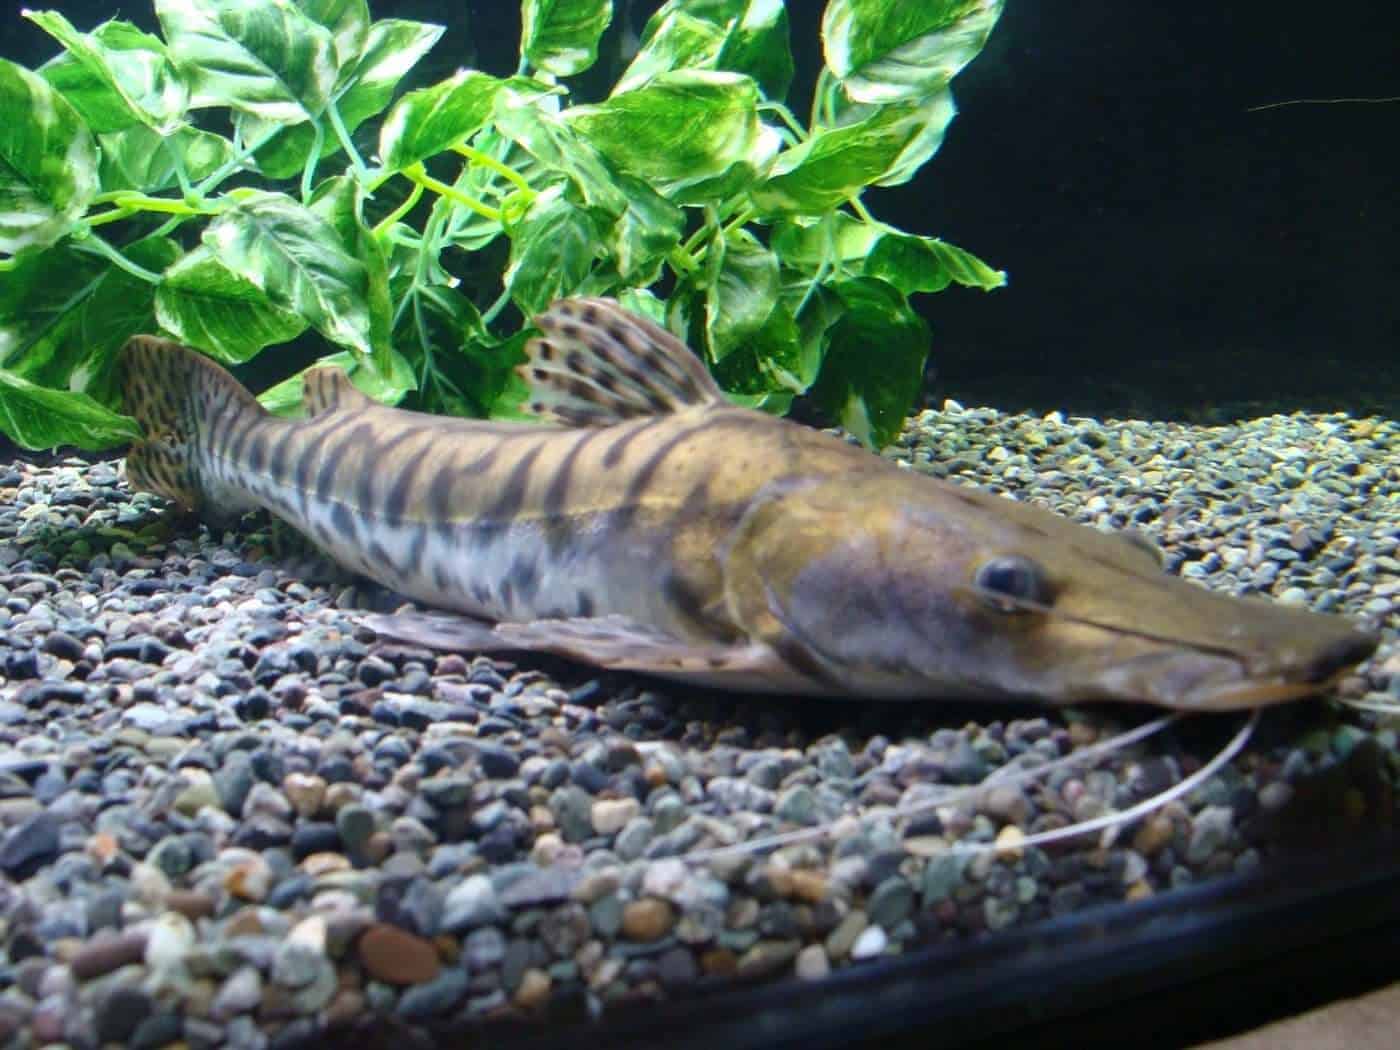 A tiger shovelnose catfish in a tank